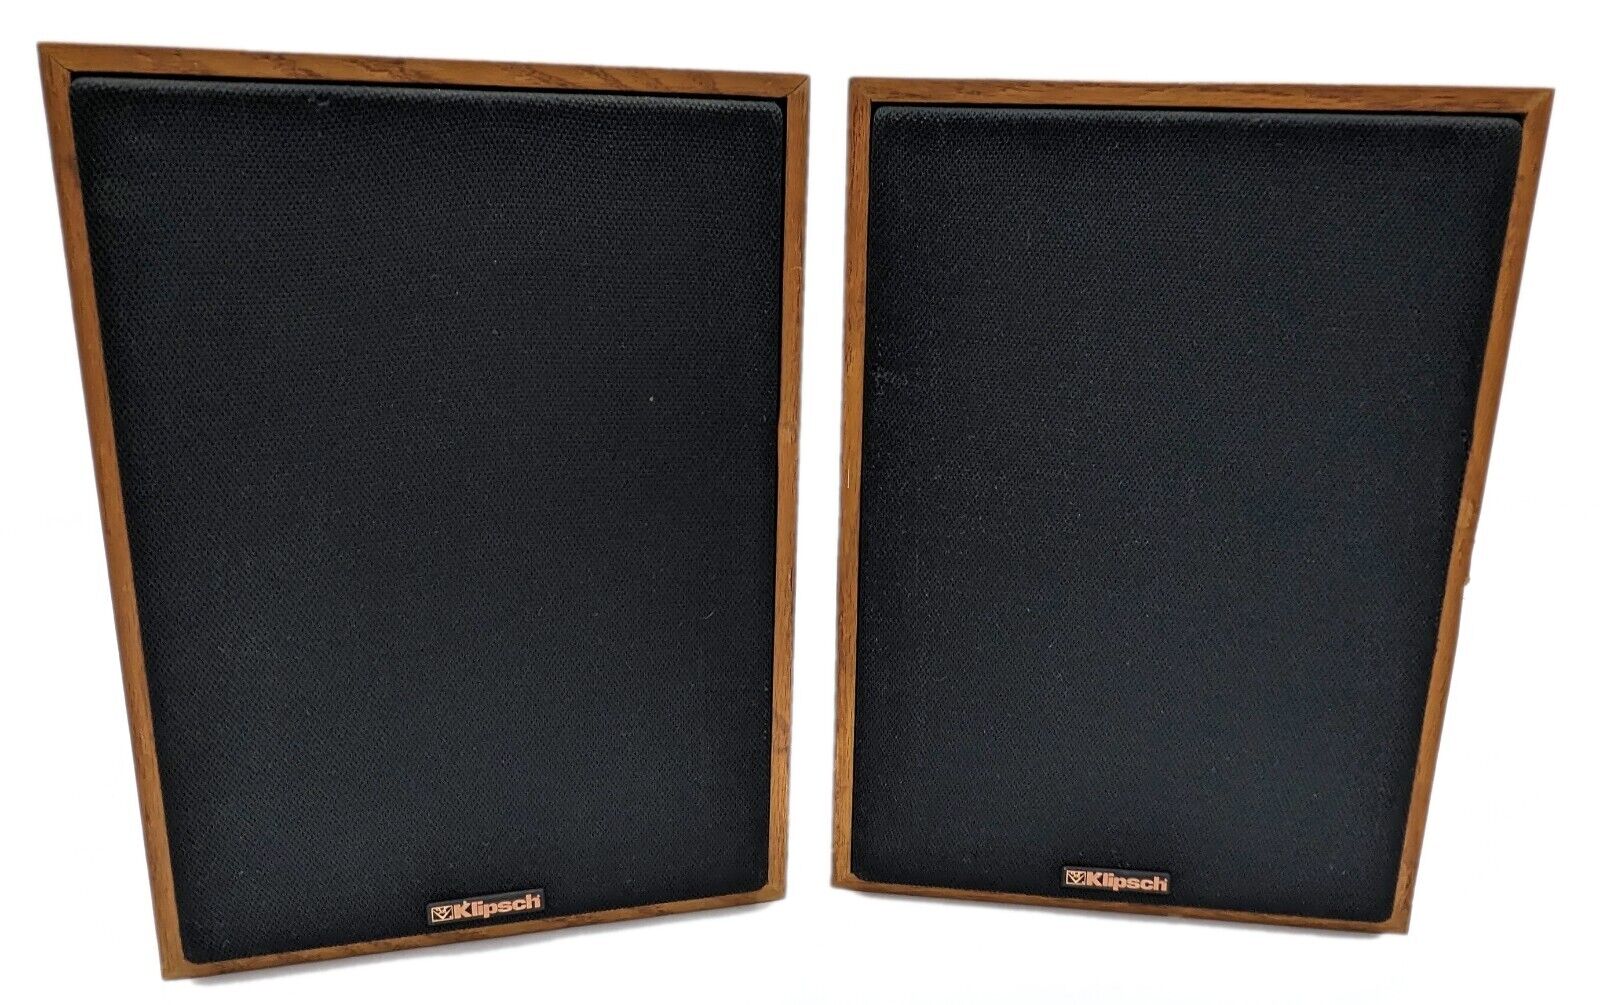 Pair of Klipsch KG1.2 Oak Clear Vintage Speakers Consecutive Serial #'s - Tested